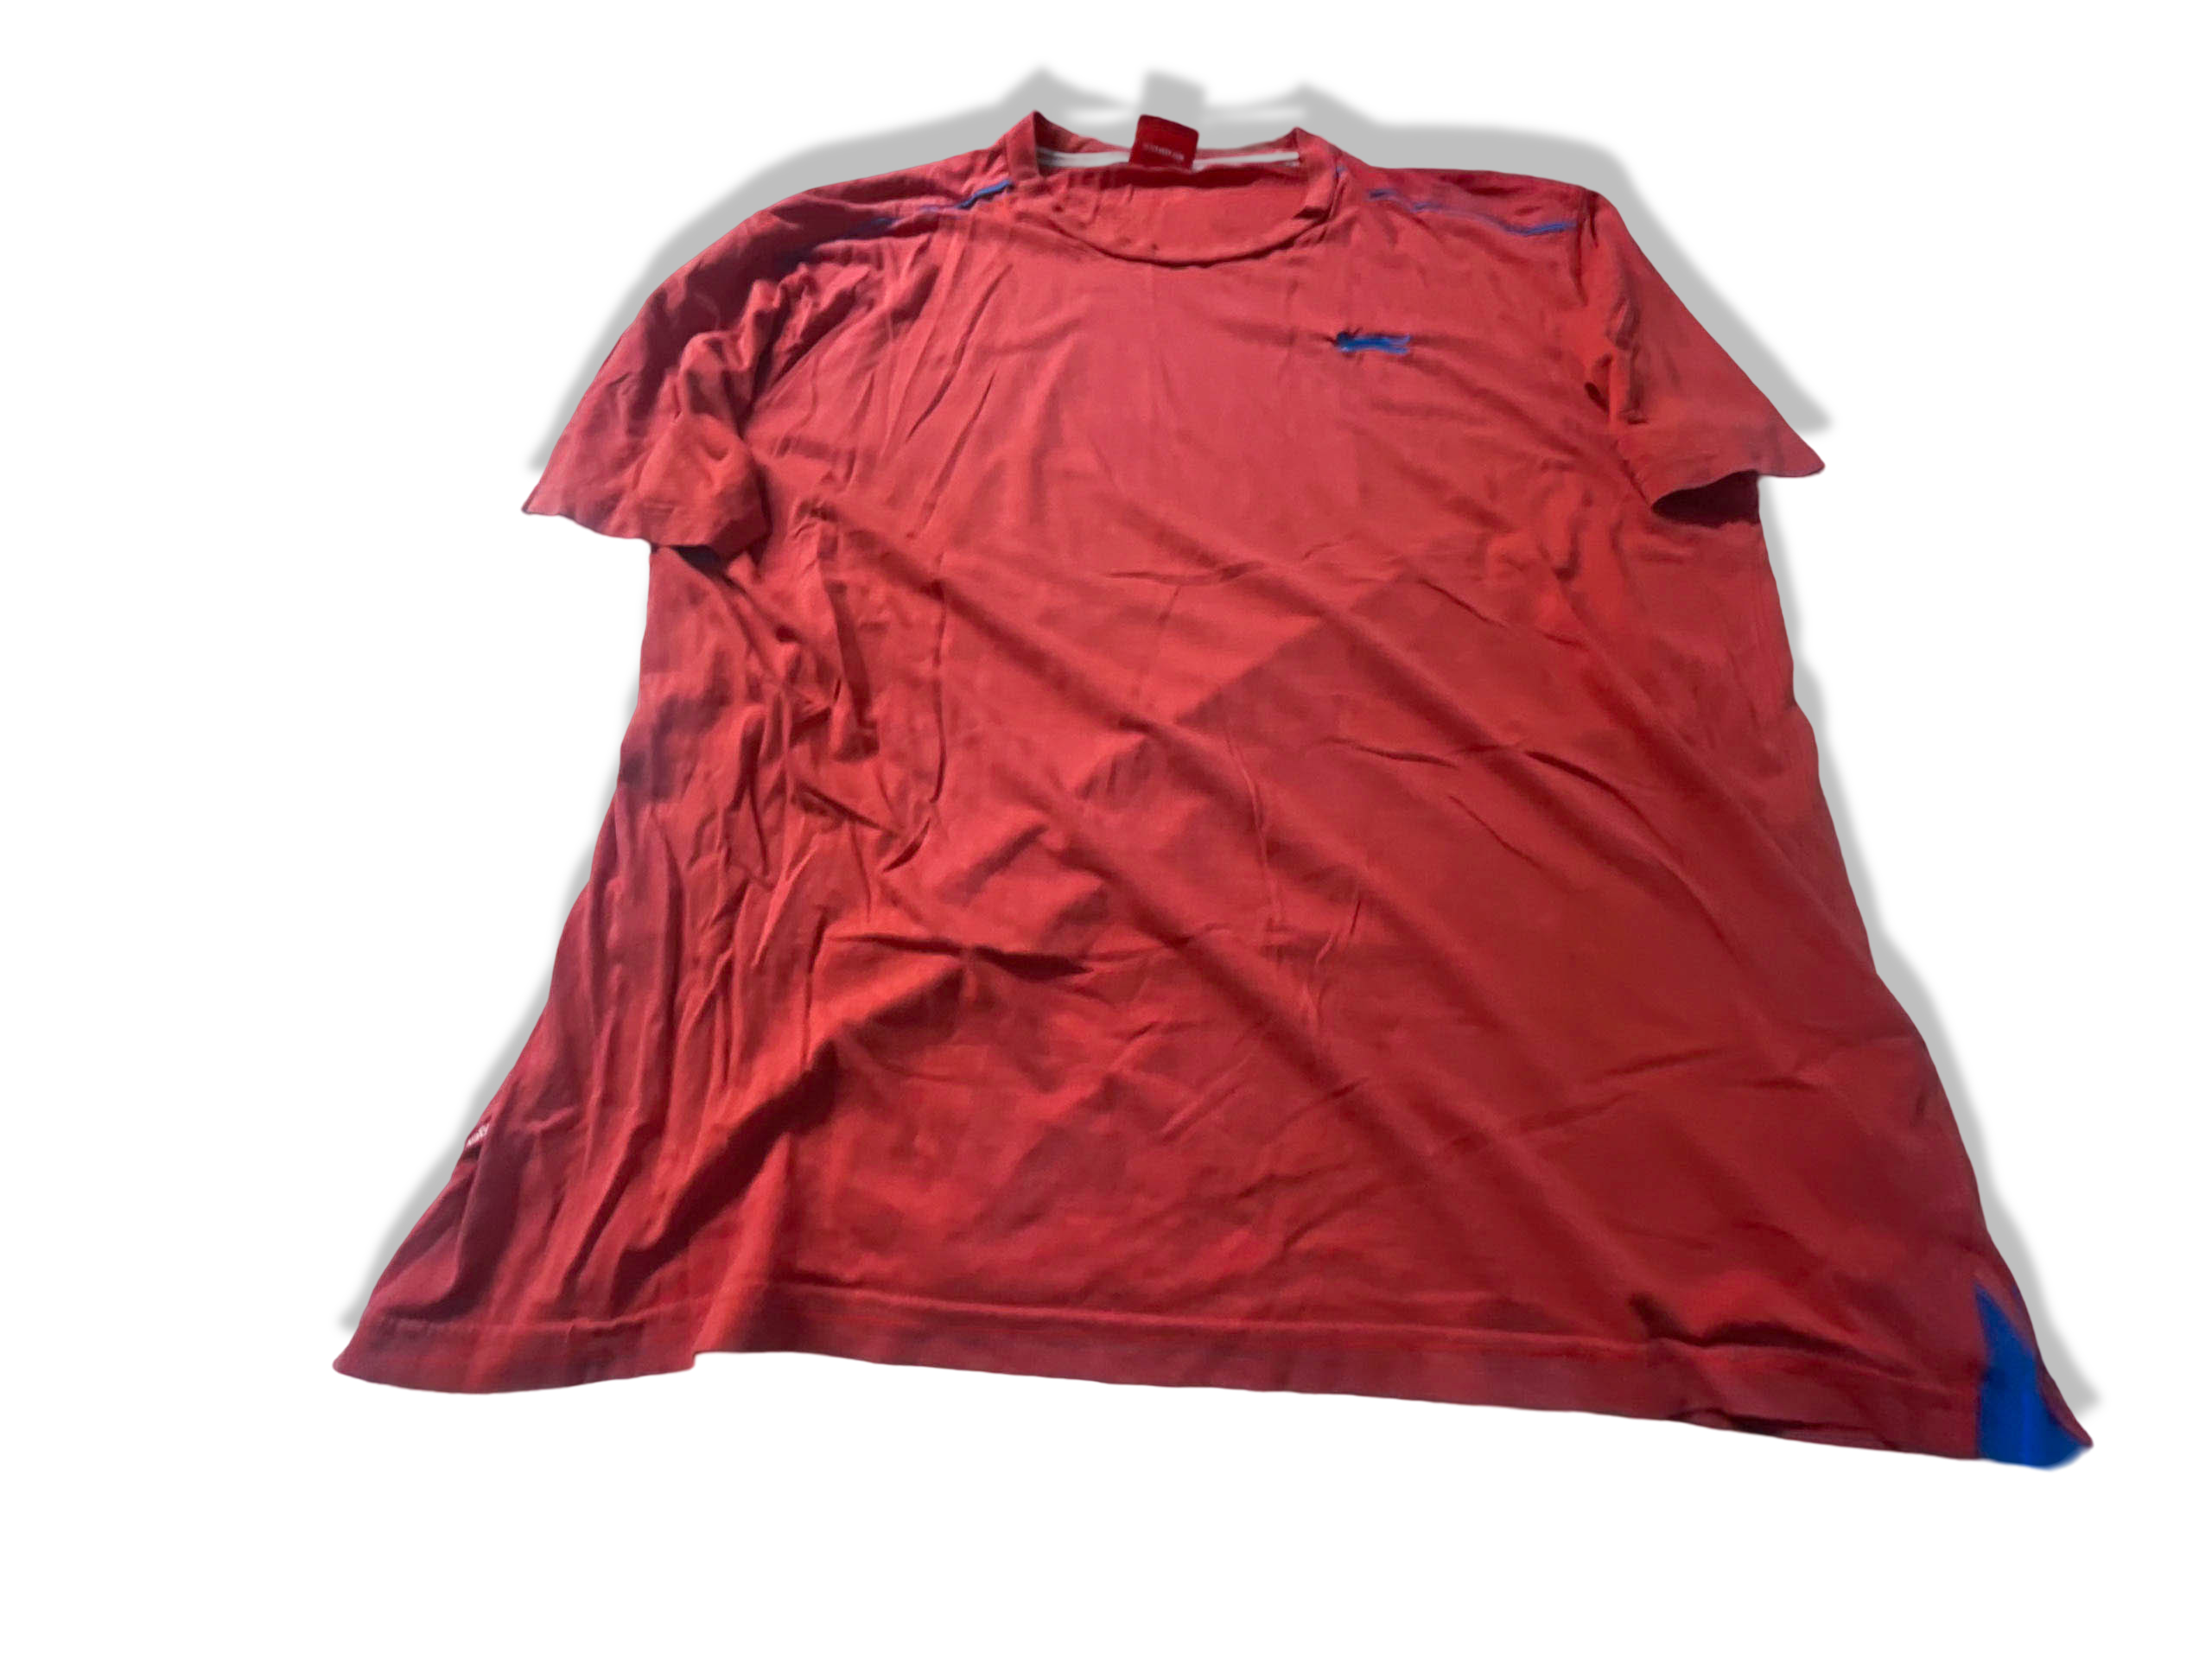 Vintage Red Men's Slazenger oversize fit tees in XXL|L30 W24| SKU 3949